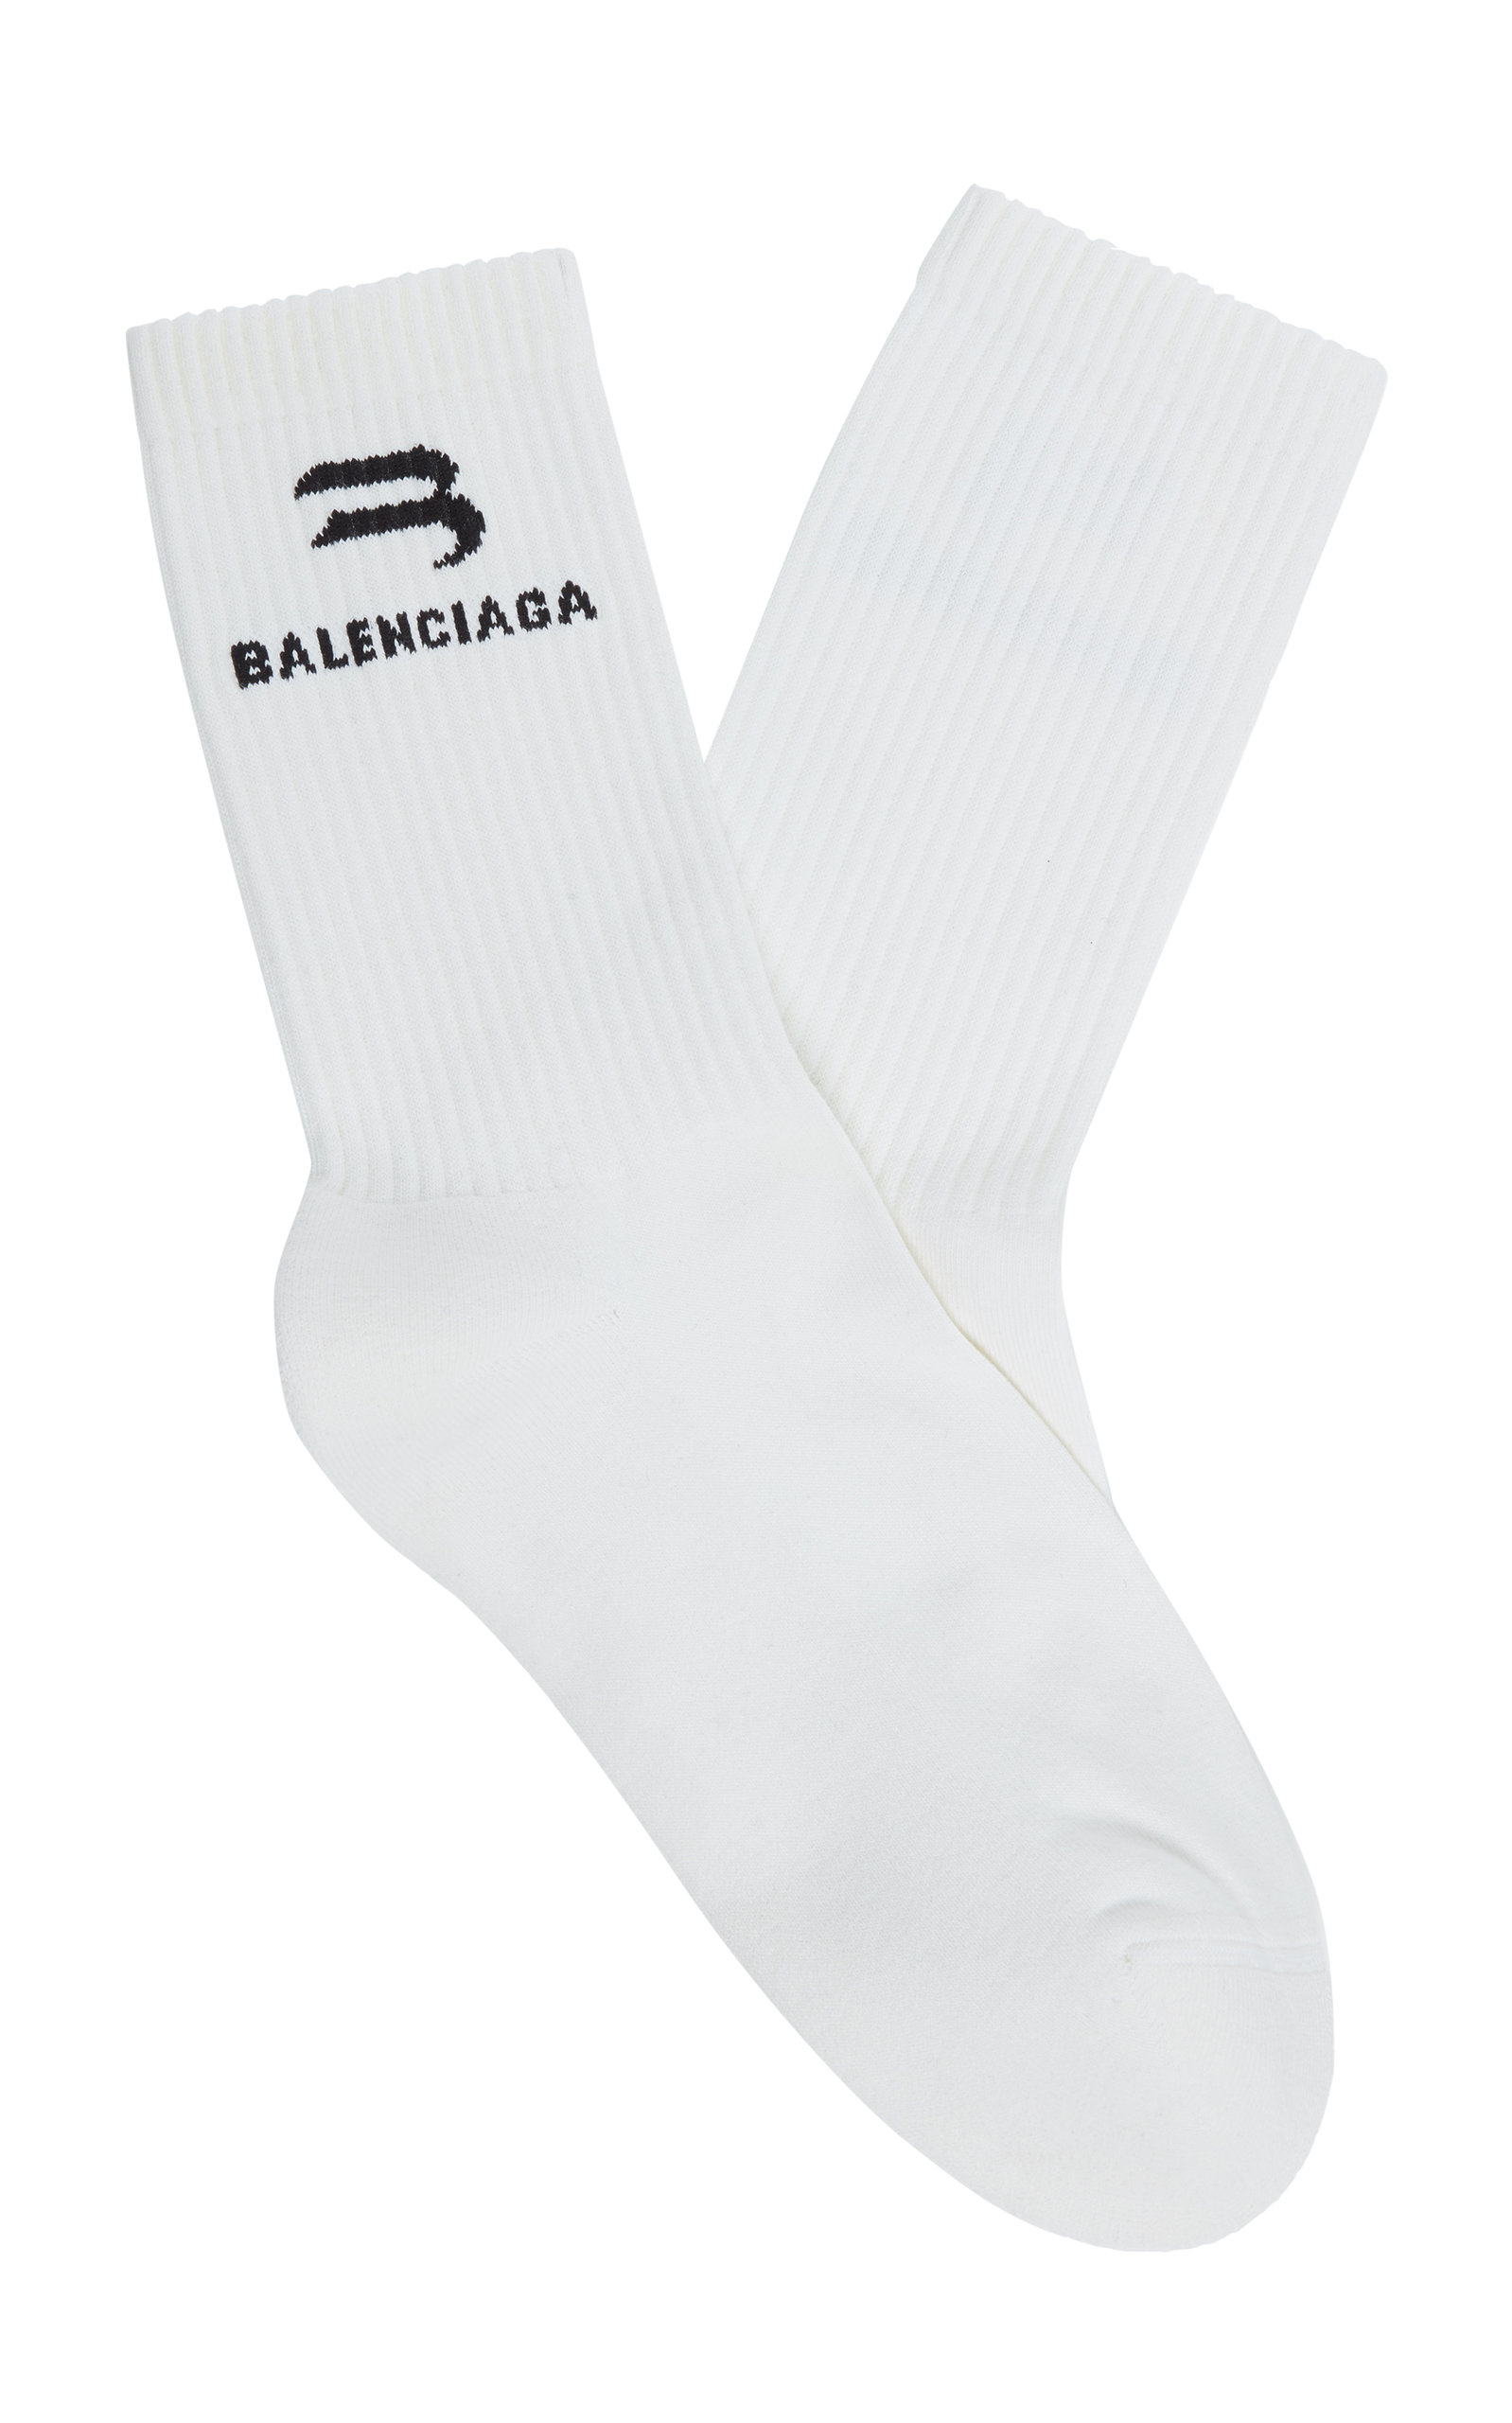 Balenciaga - Women's Glow in the Dark Socks - White - Moda Operandi